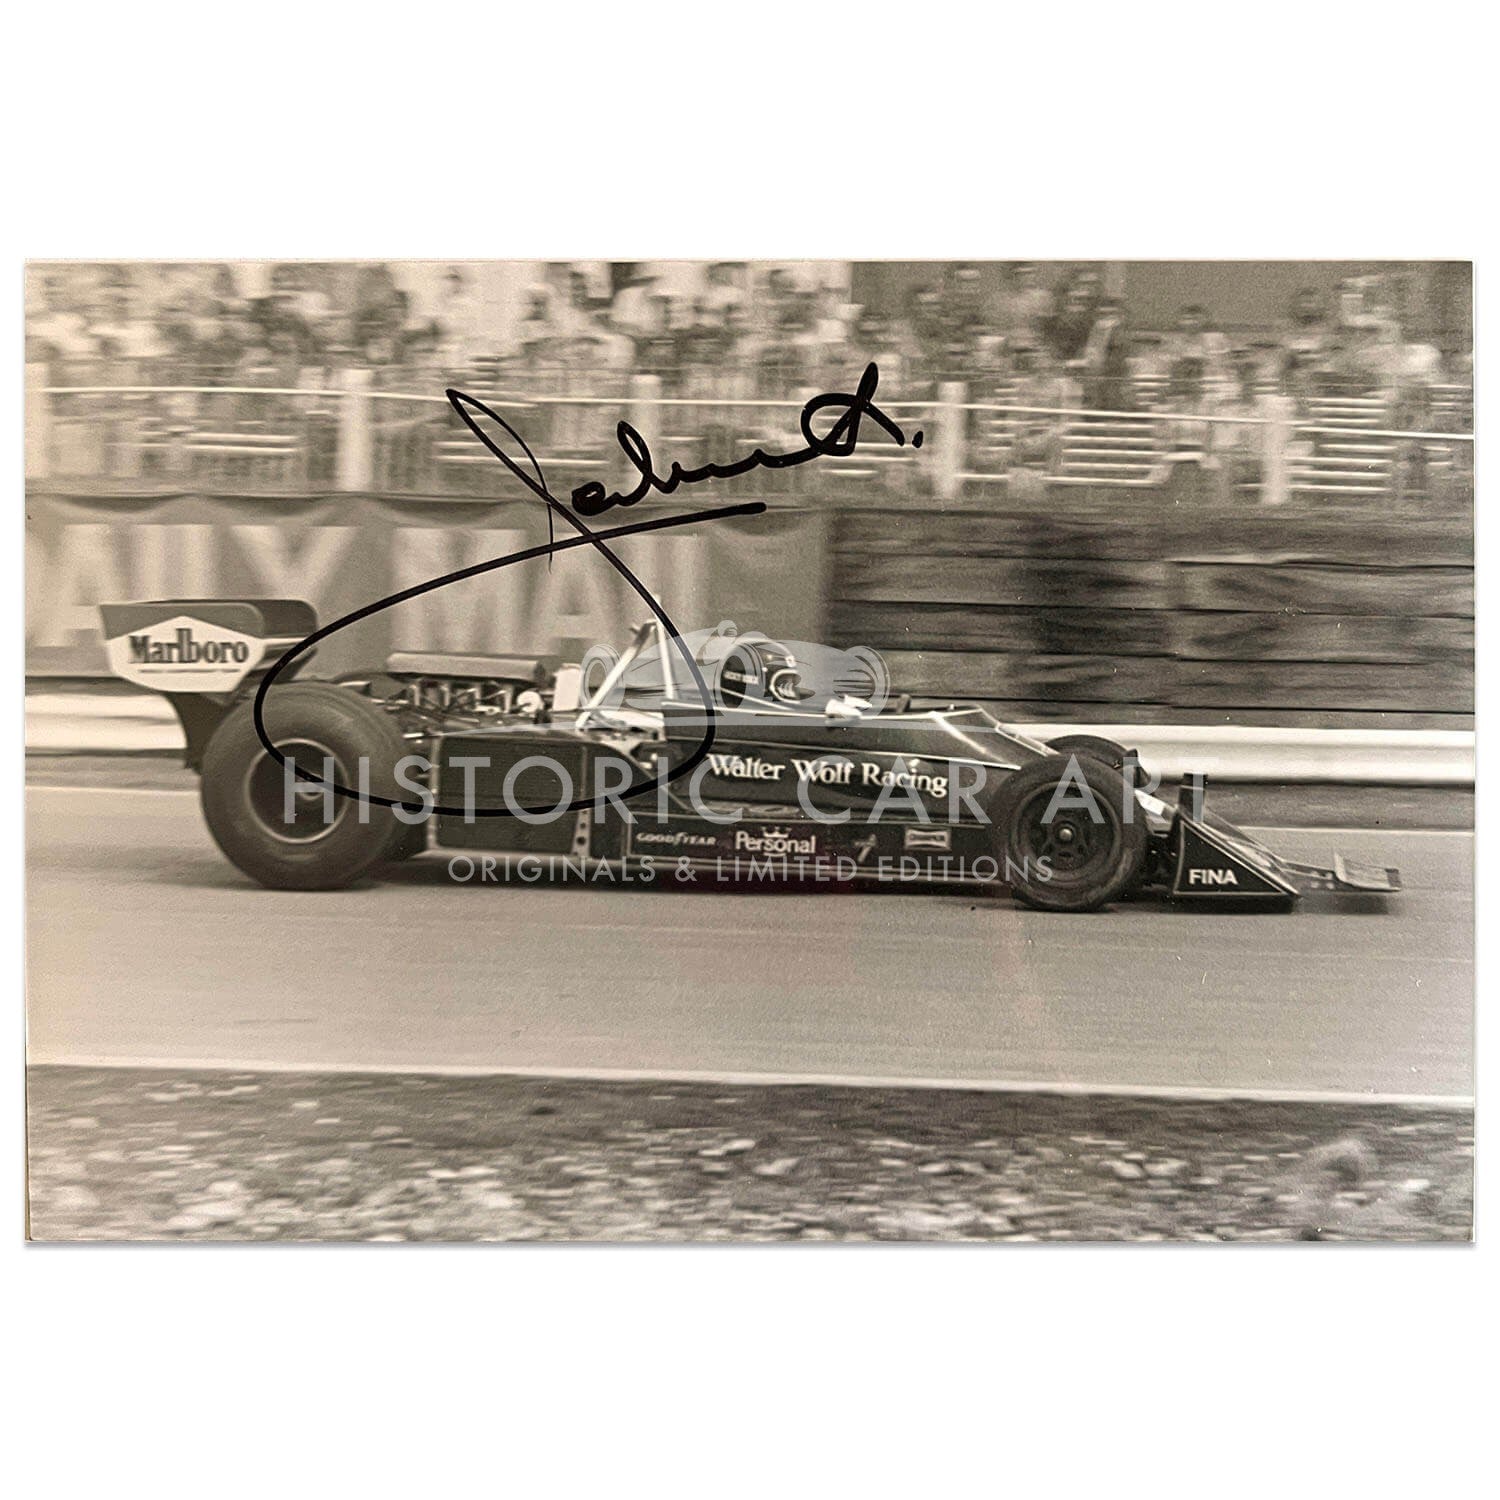 Jakcy Ickx | 1976 British Grand Prix Qualifying | Signed Photograph